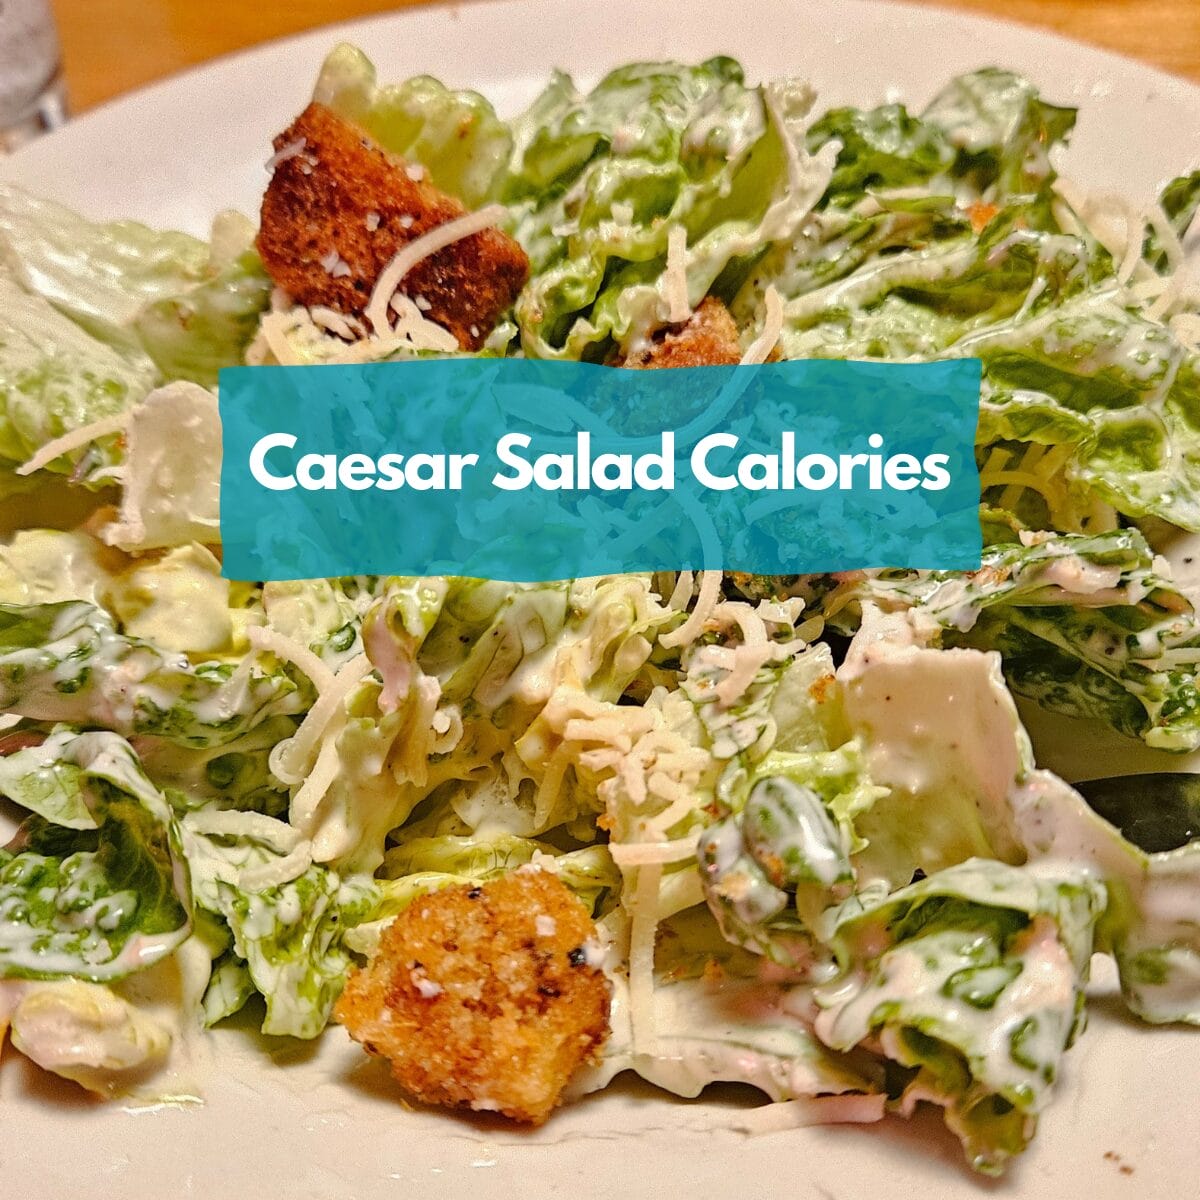 Caesar salad calories